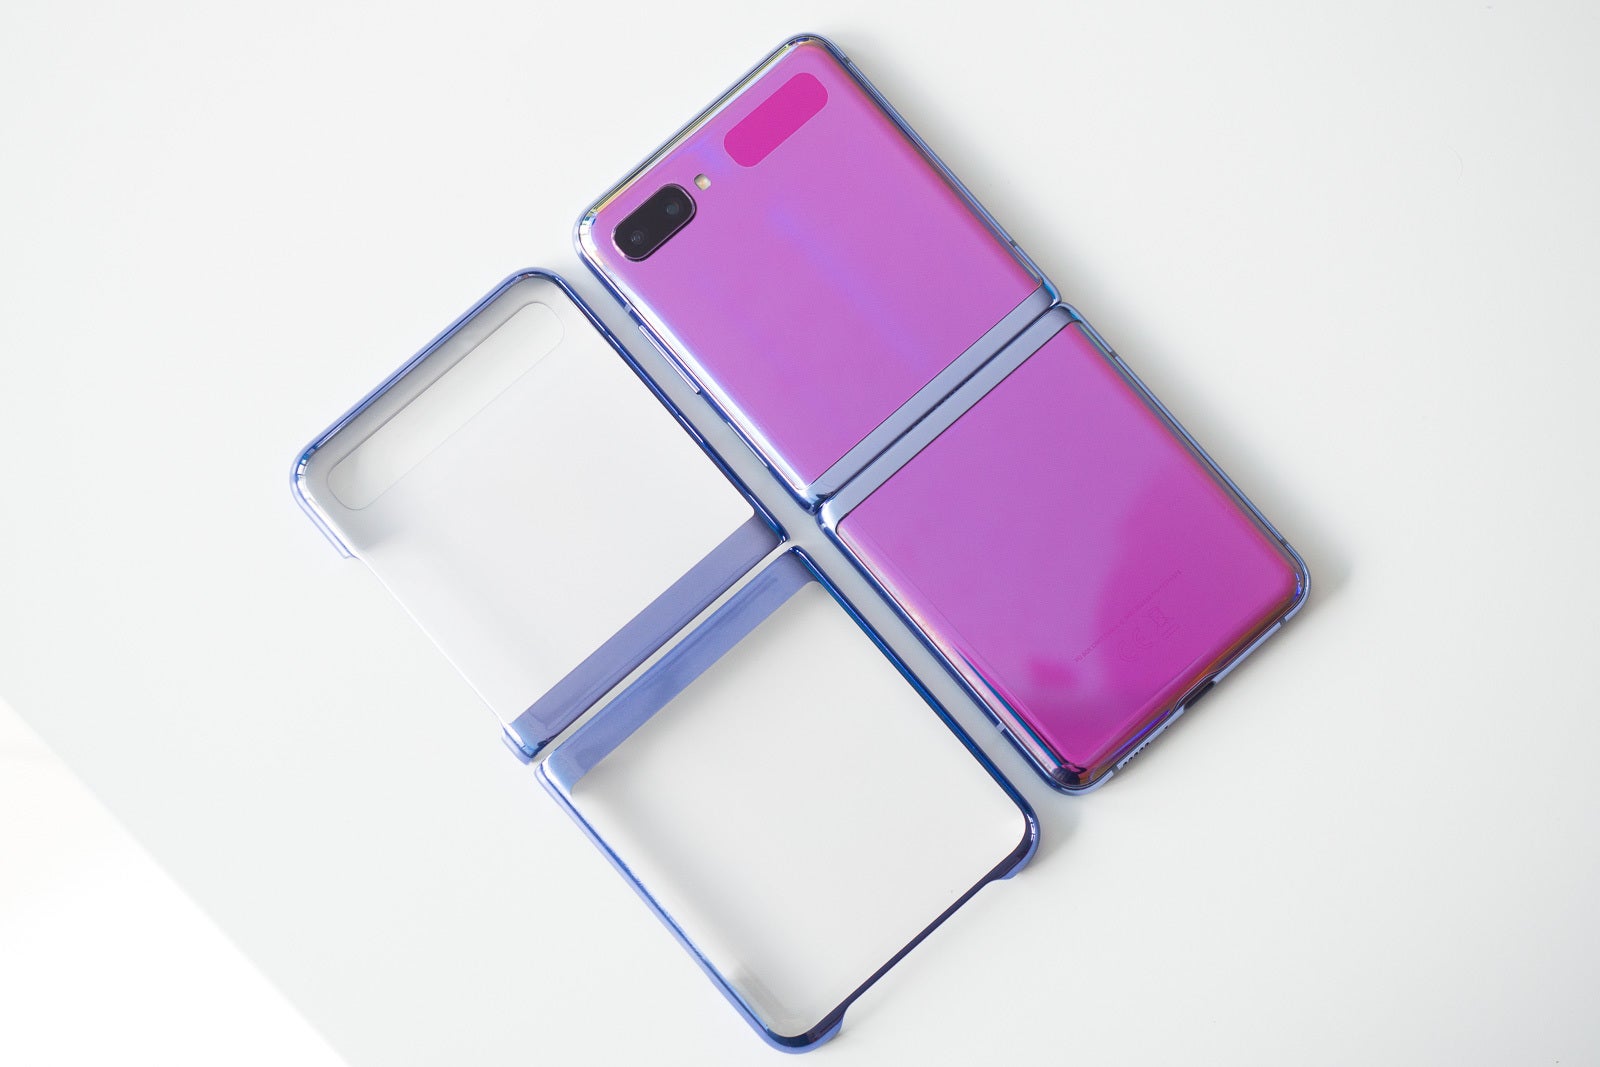 Begone, plastic case - Samsung Galaxy Z Flip, three months later: is it worth buying?